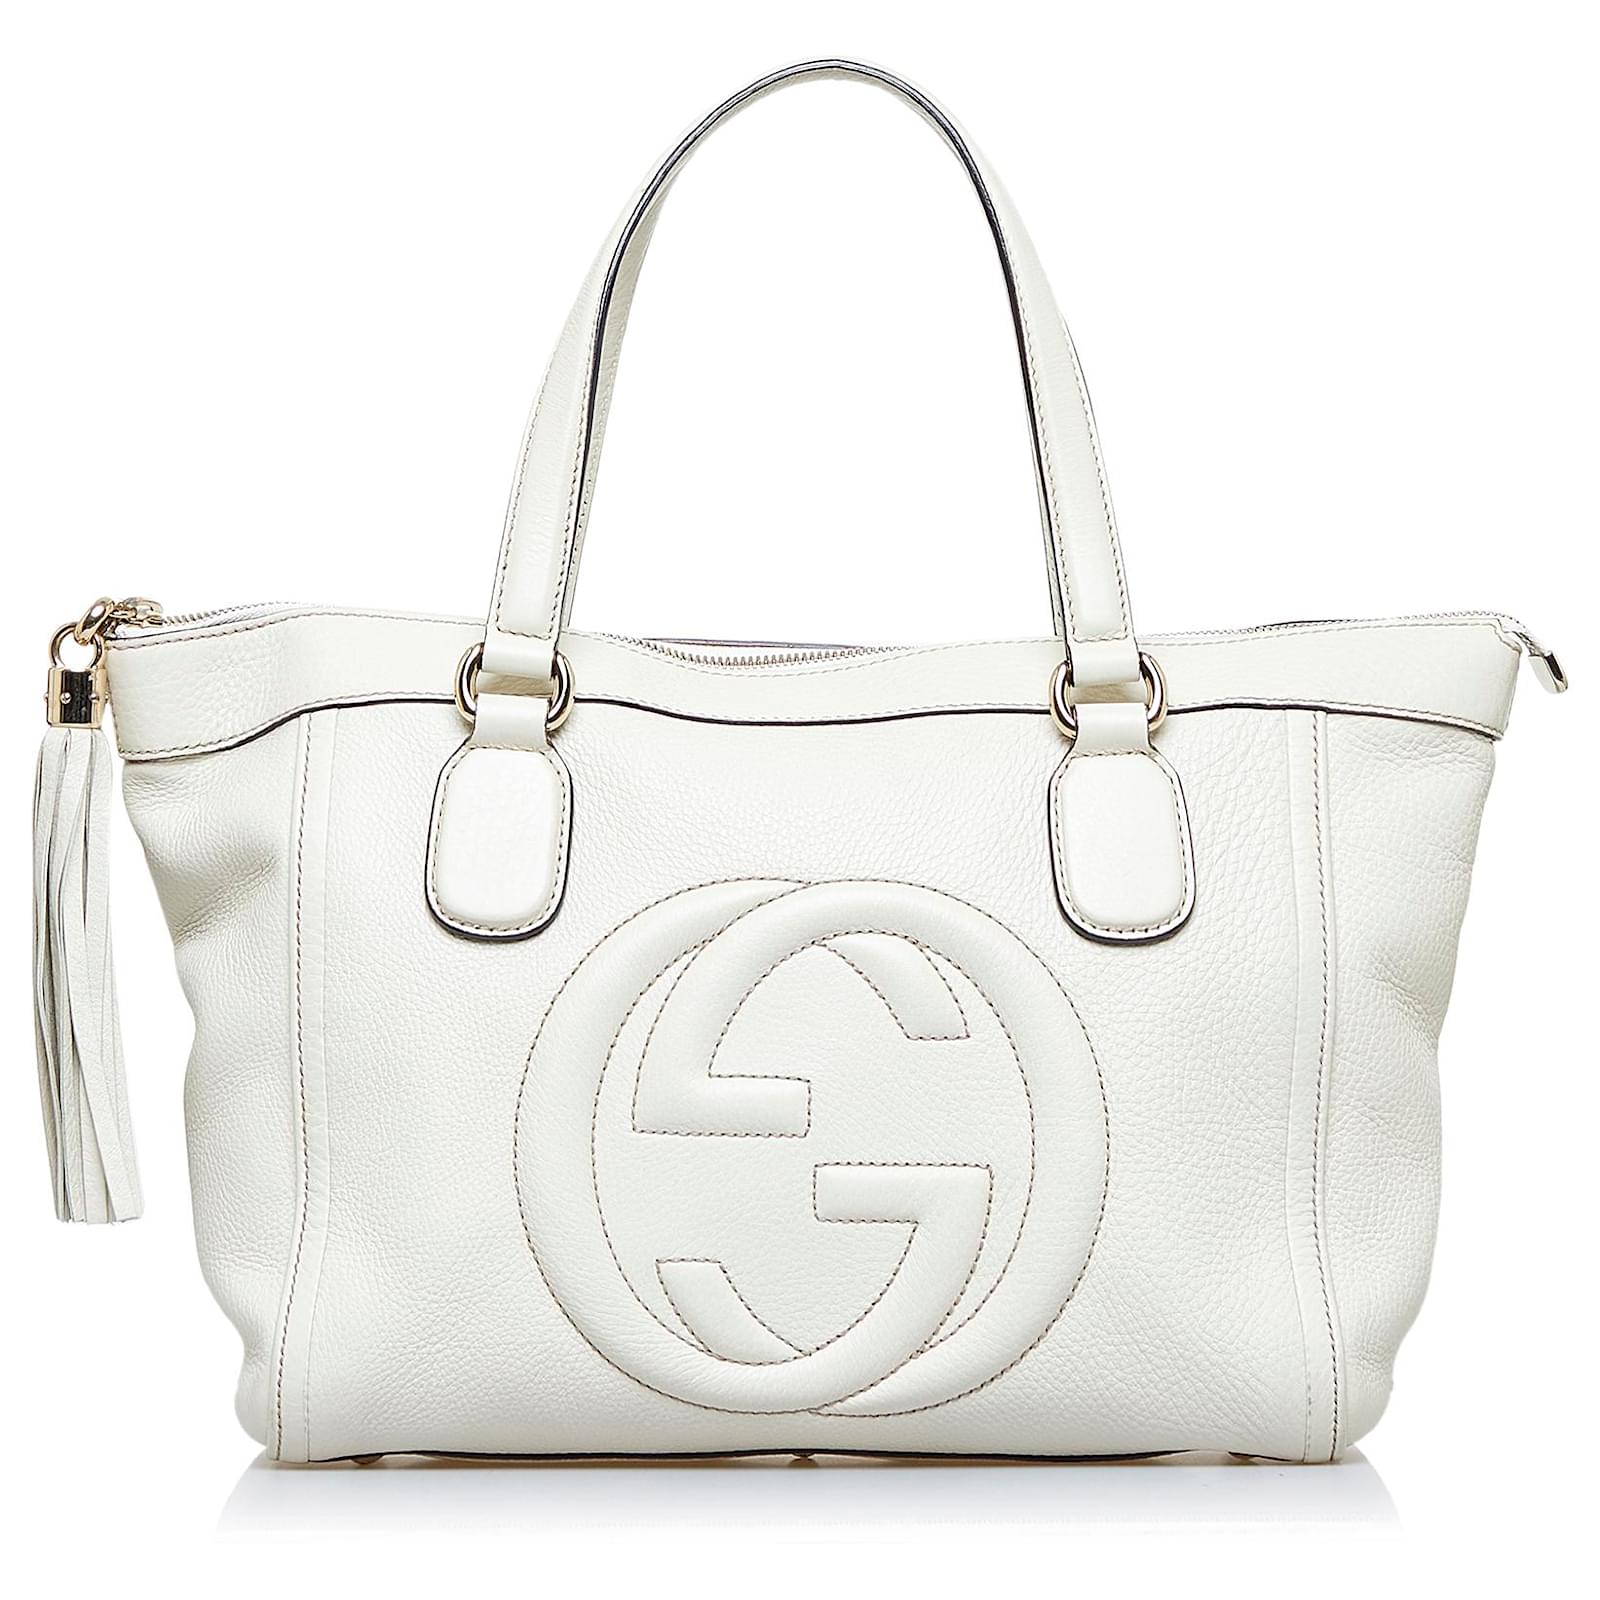 Gucci White Leather Soho Tote Bag